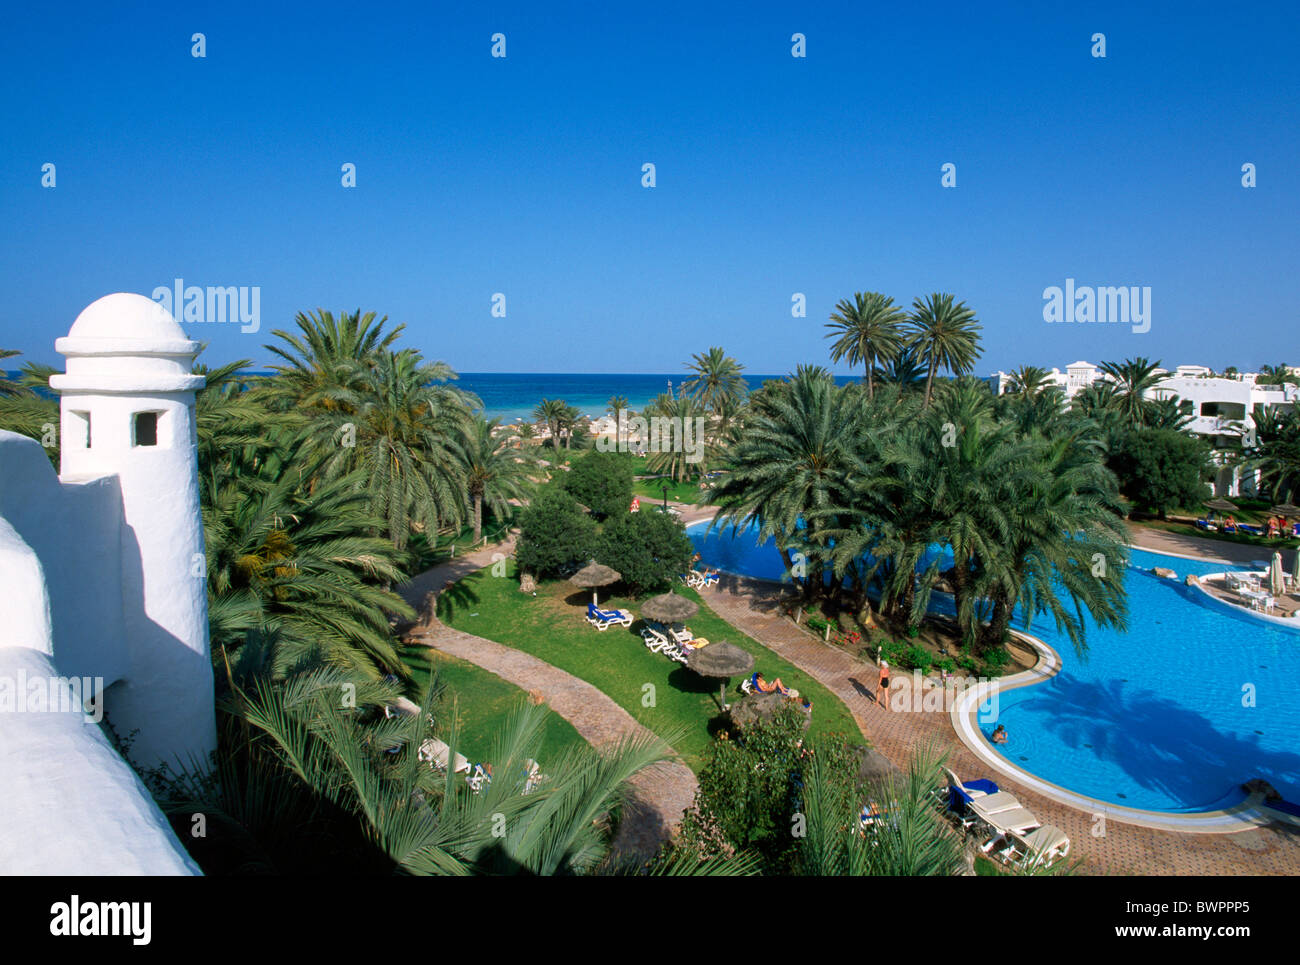 Tunisia Djerba island Hotel Odyssee Zarzis Oasis Africa North Africa Mediterranean Sea coast island Pool bea Stock Photo